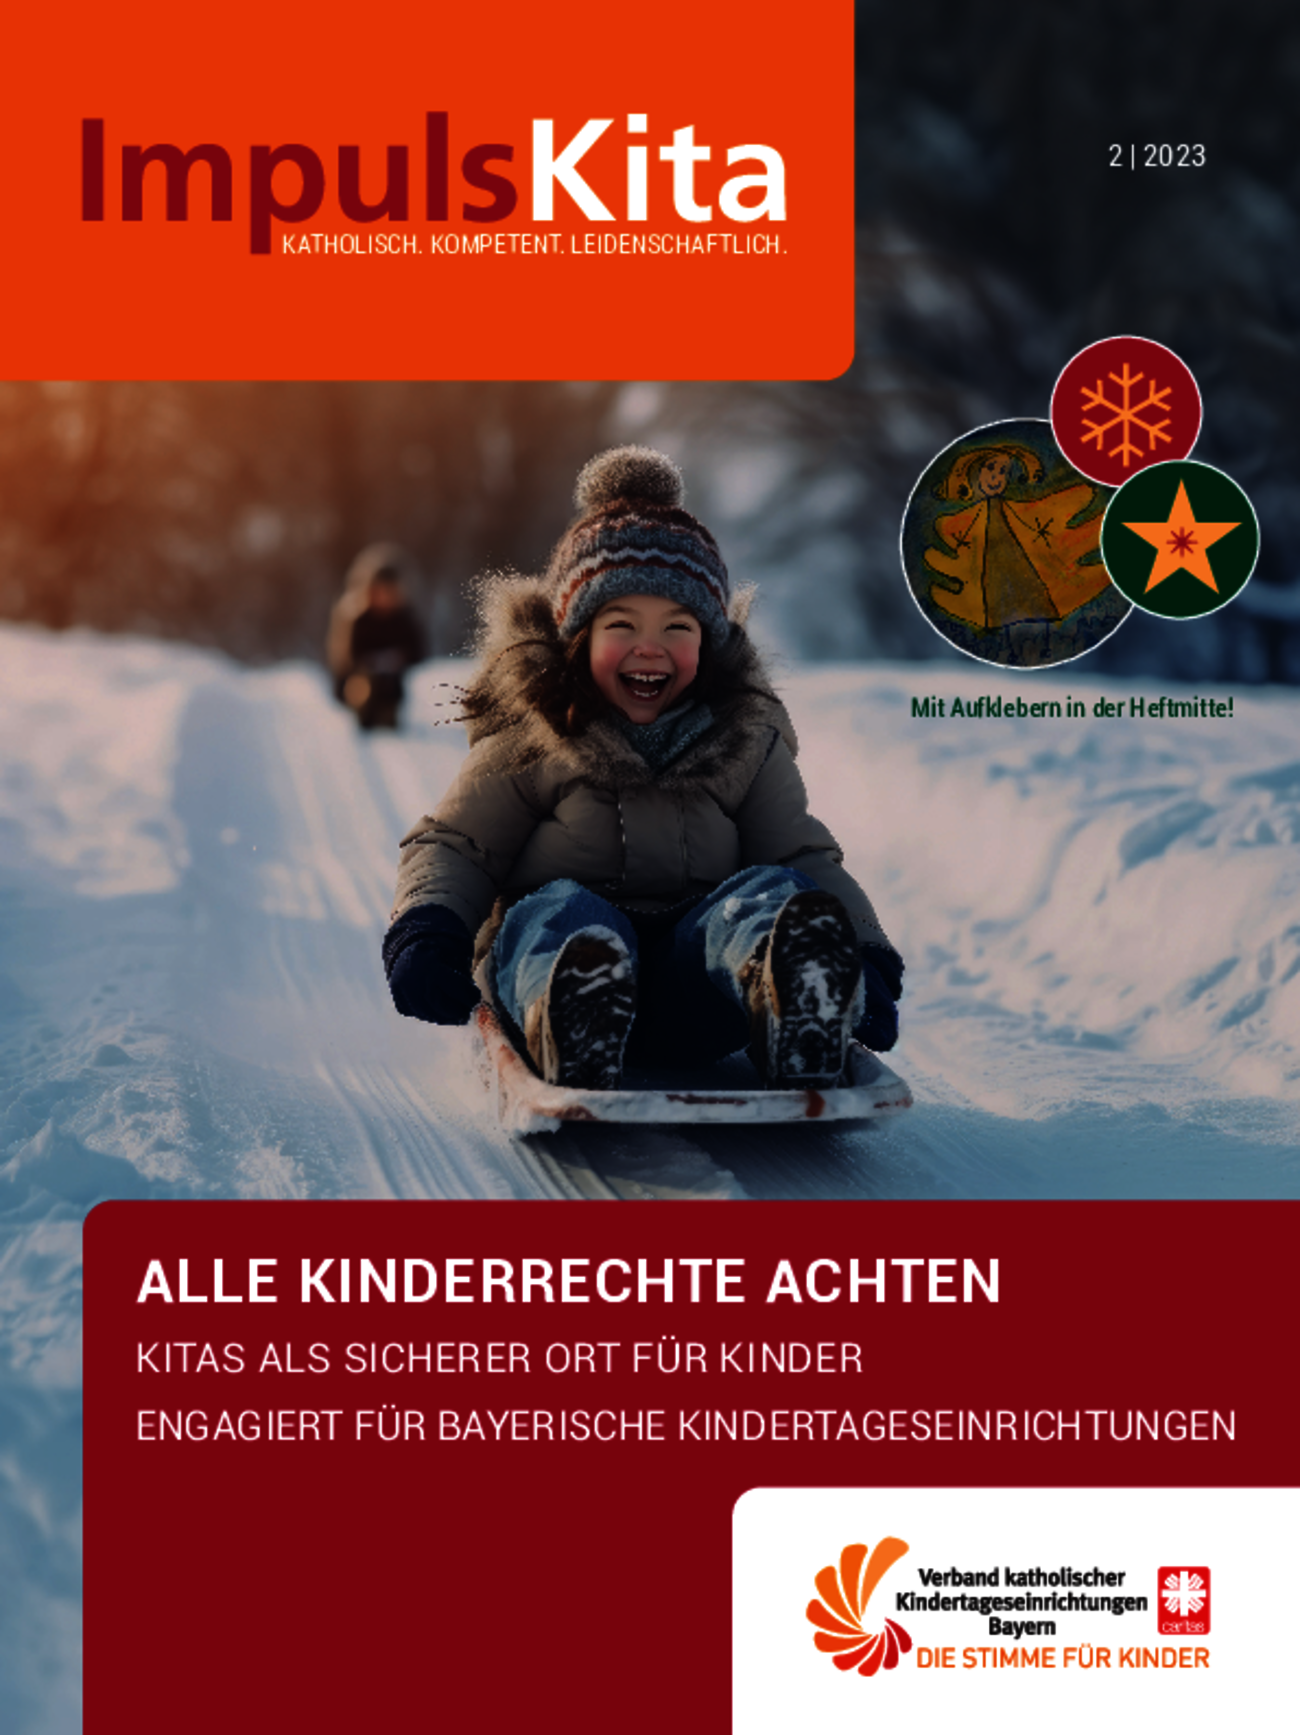 Titelbild ImpulsKita Magazin 2/2023 - Copyright Verband kath. Kindertageseinrichtungen Bayern e.V.